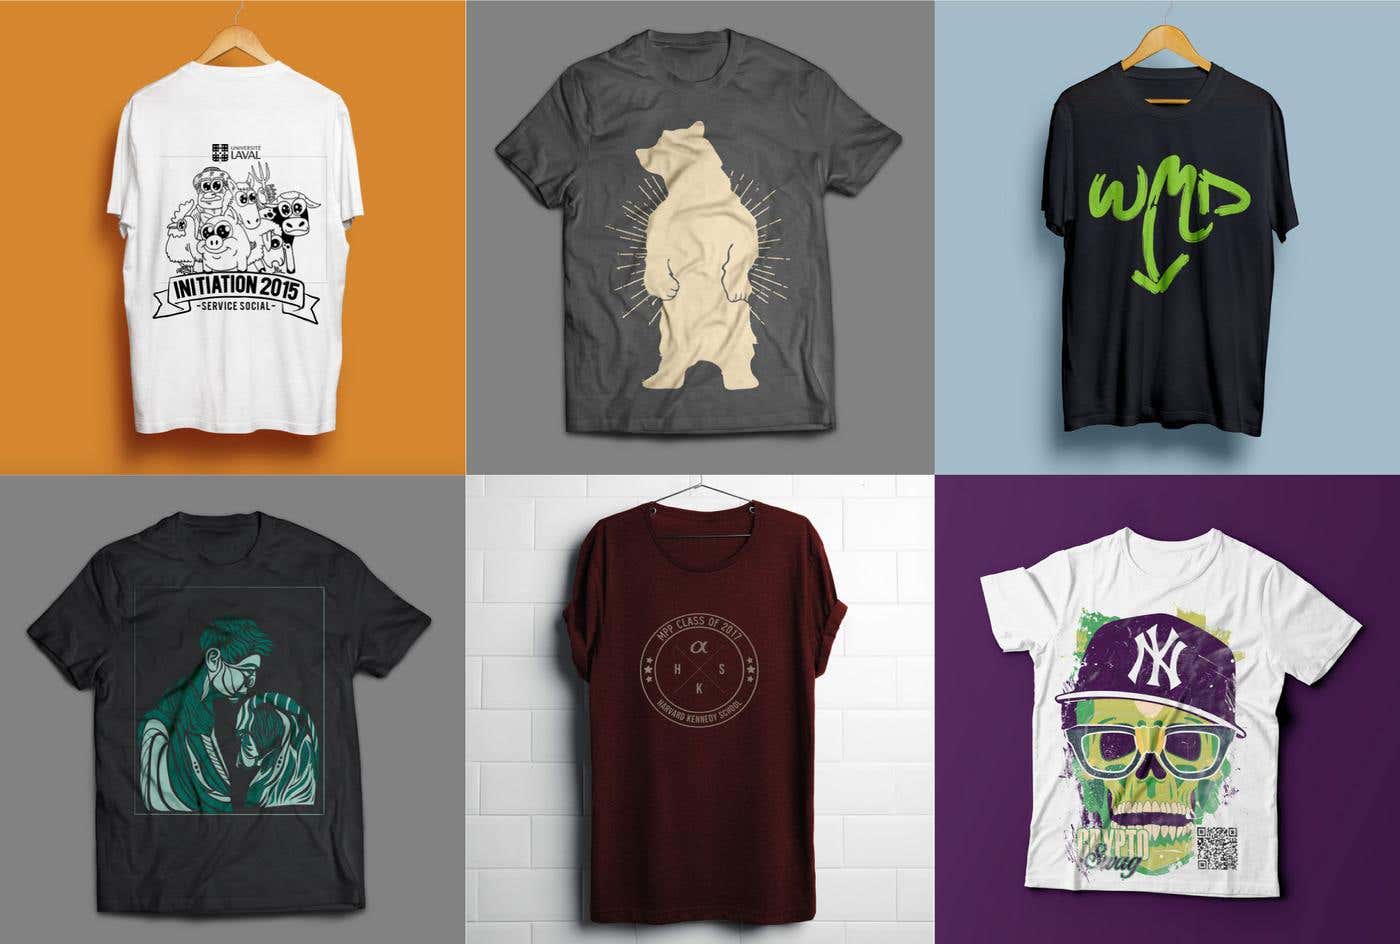 23 Of The Best T-Shirt Design Ideas Ever